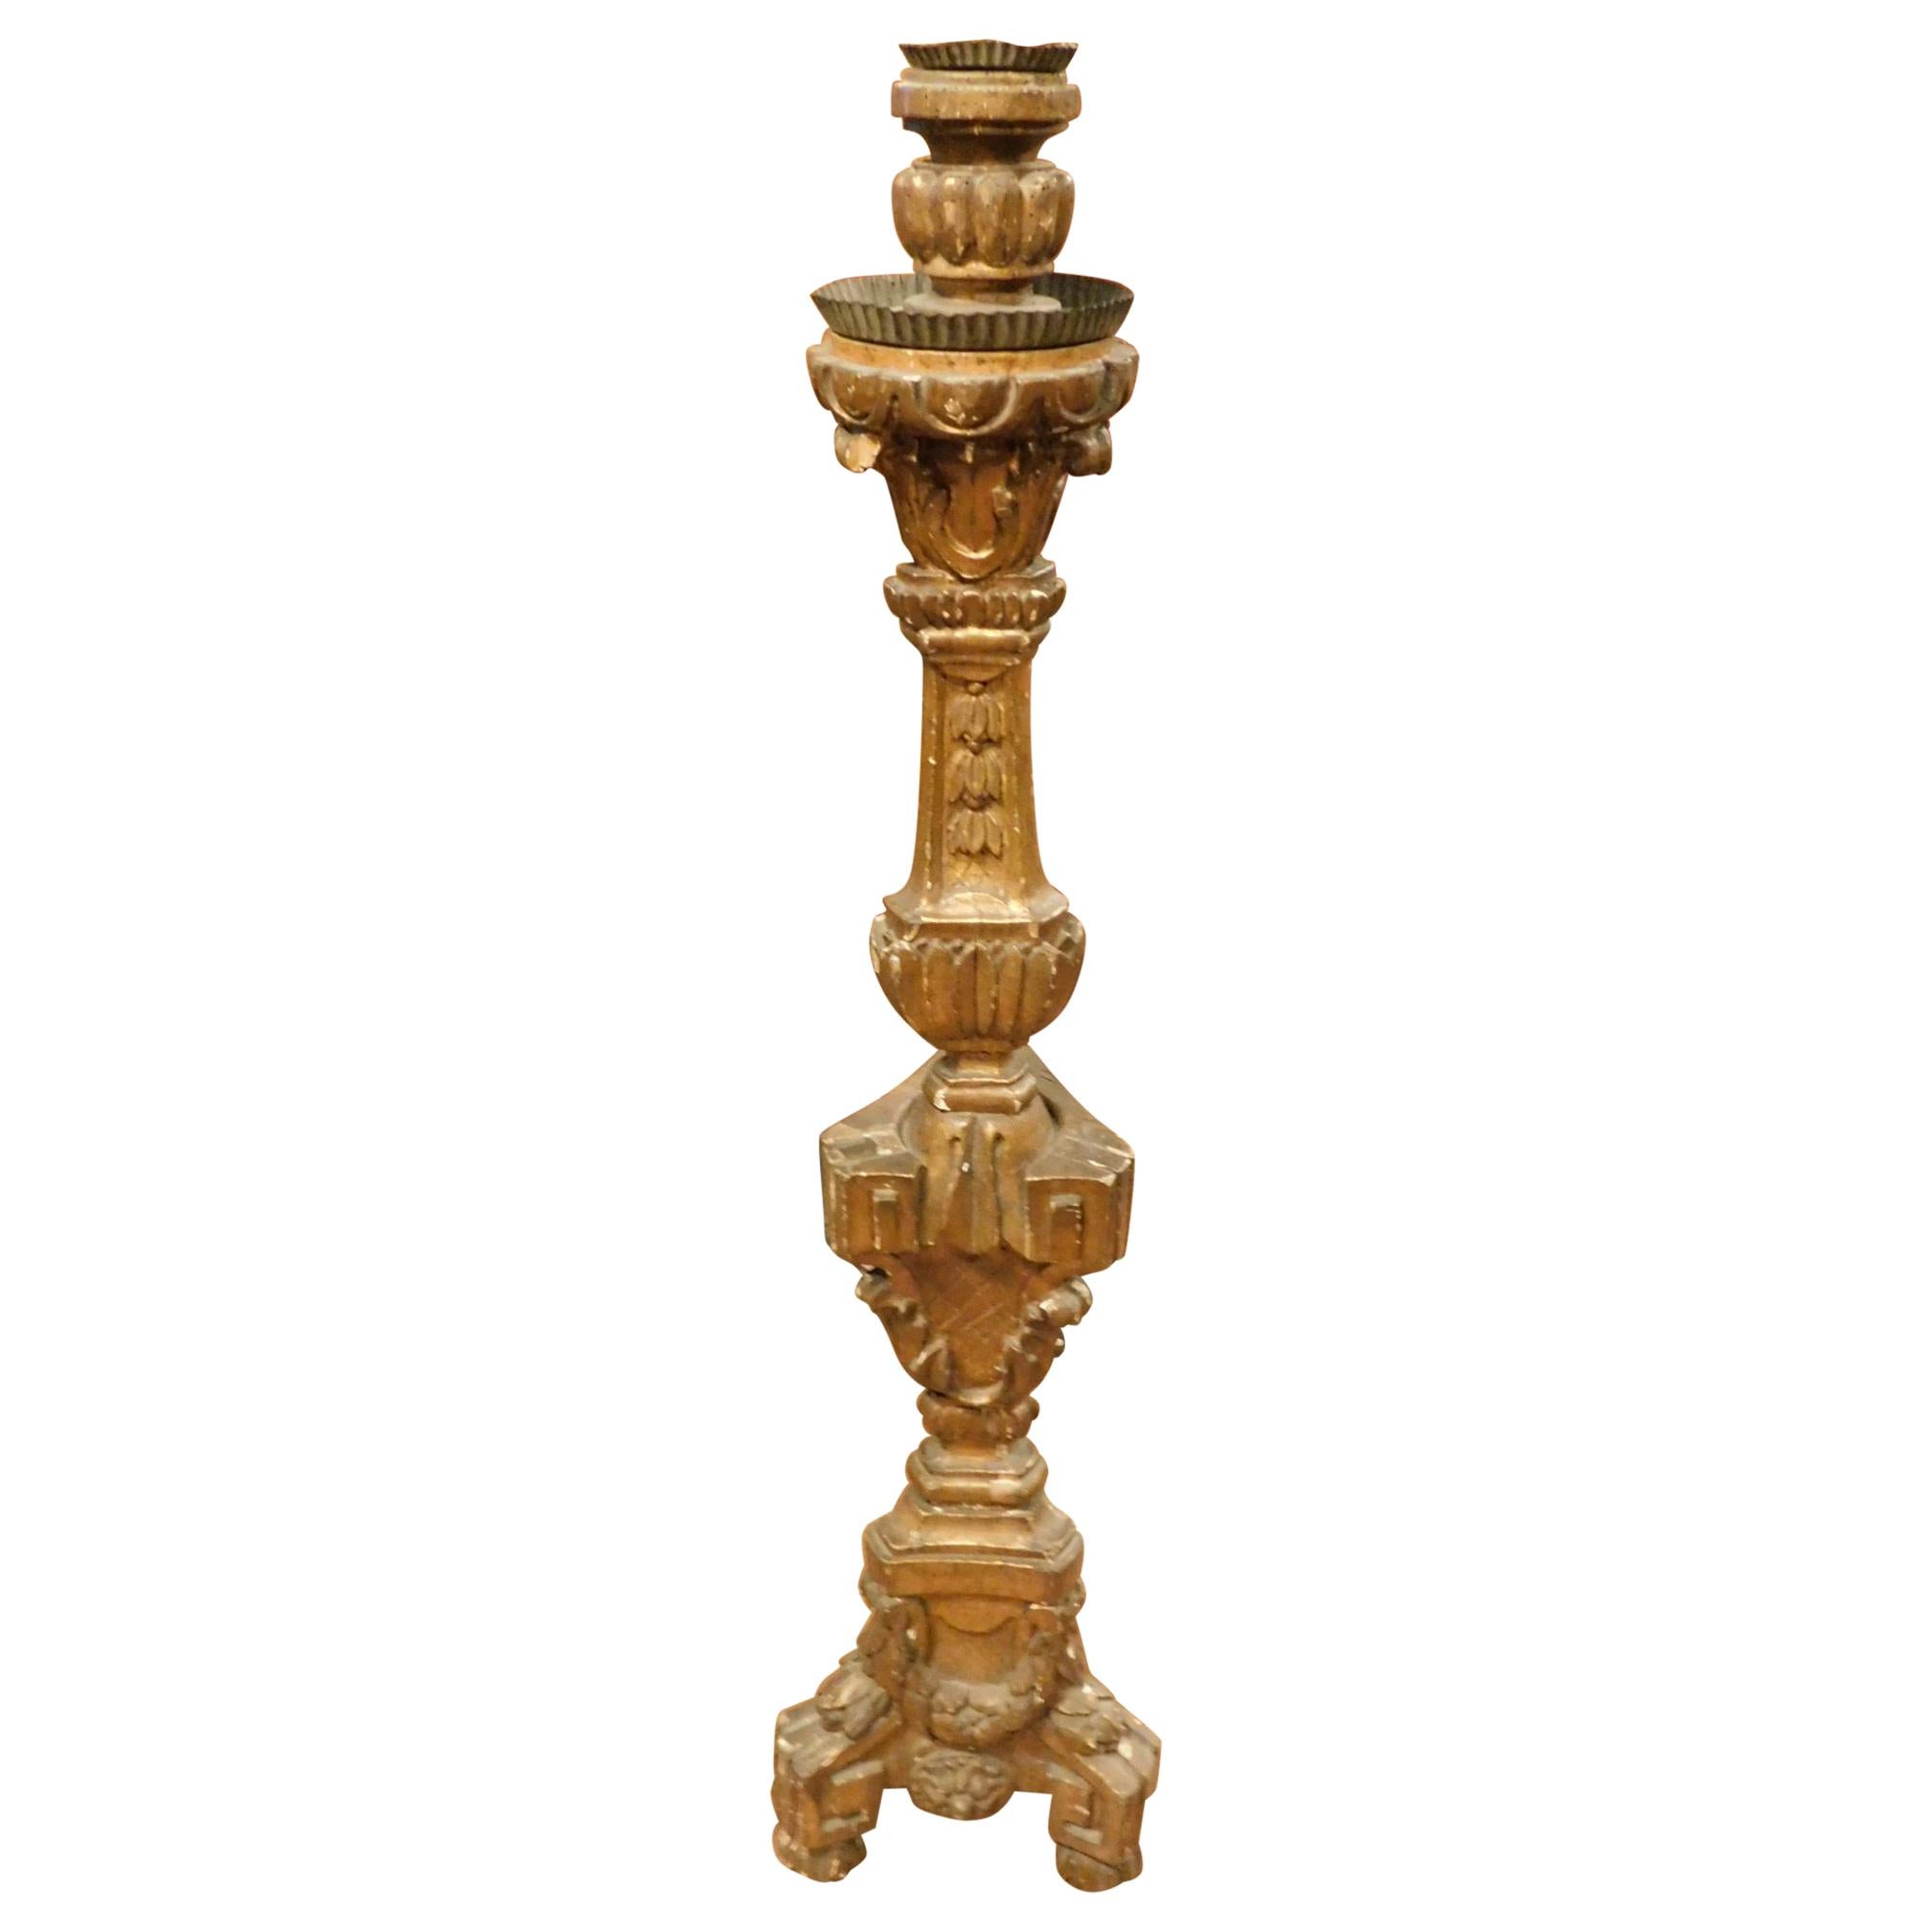 Antique Chandelier or Floor Lamp, Wood Gold, Italy, 1700